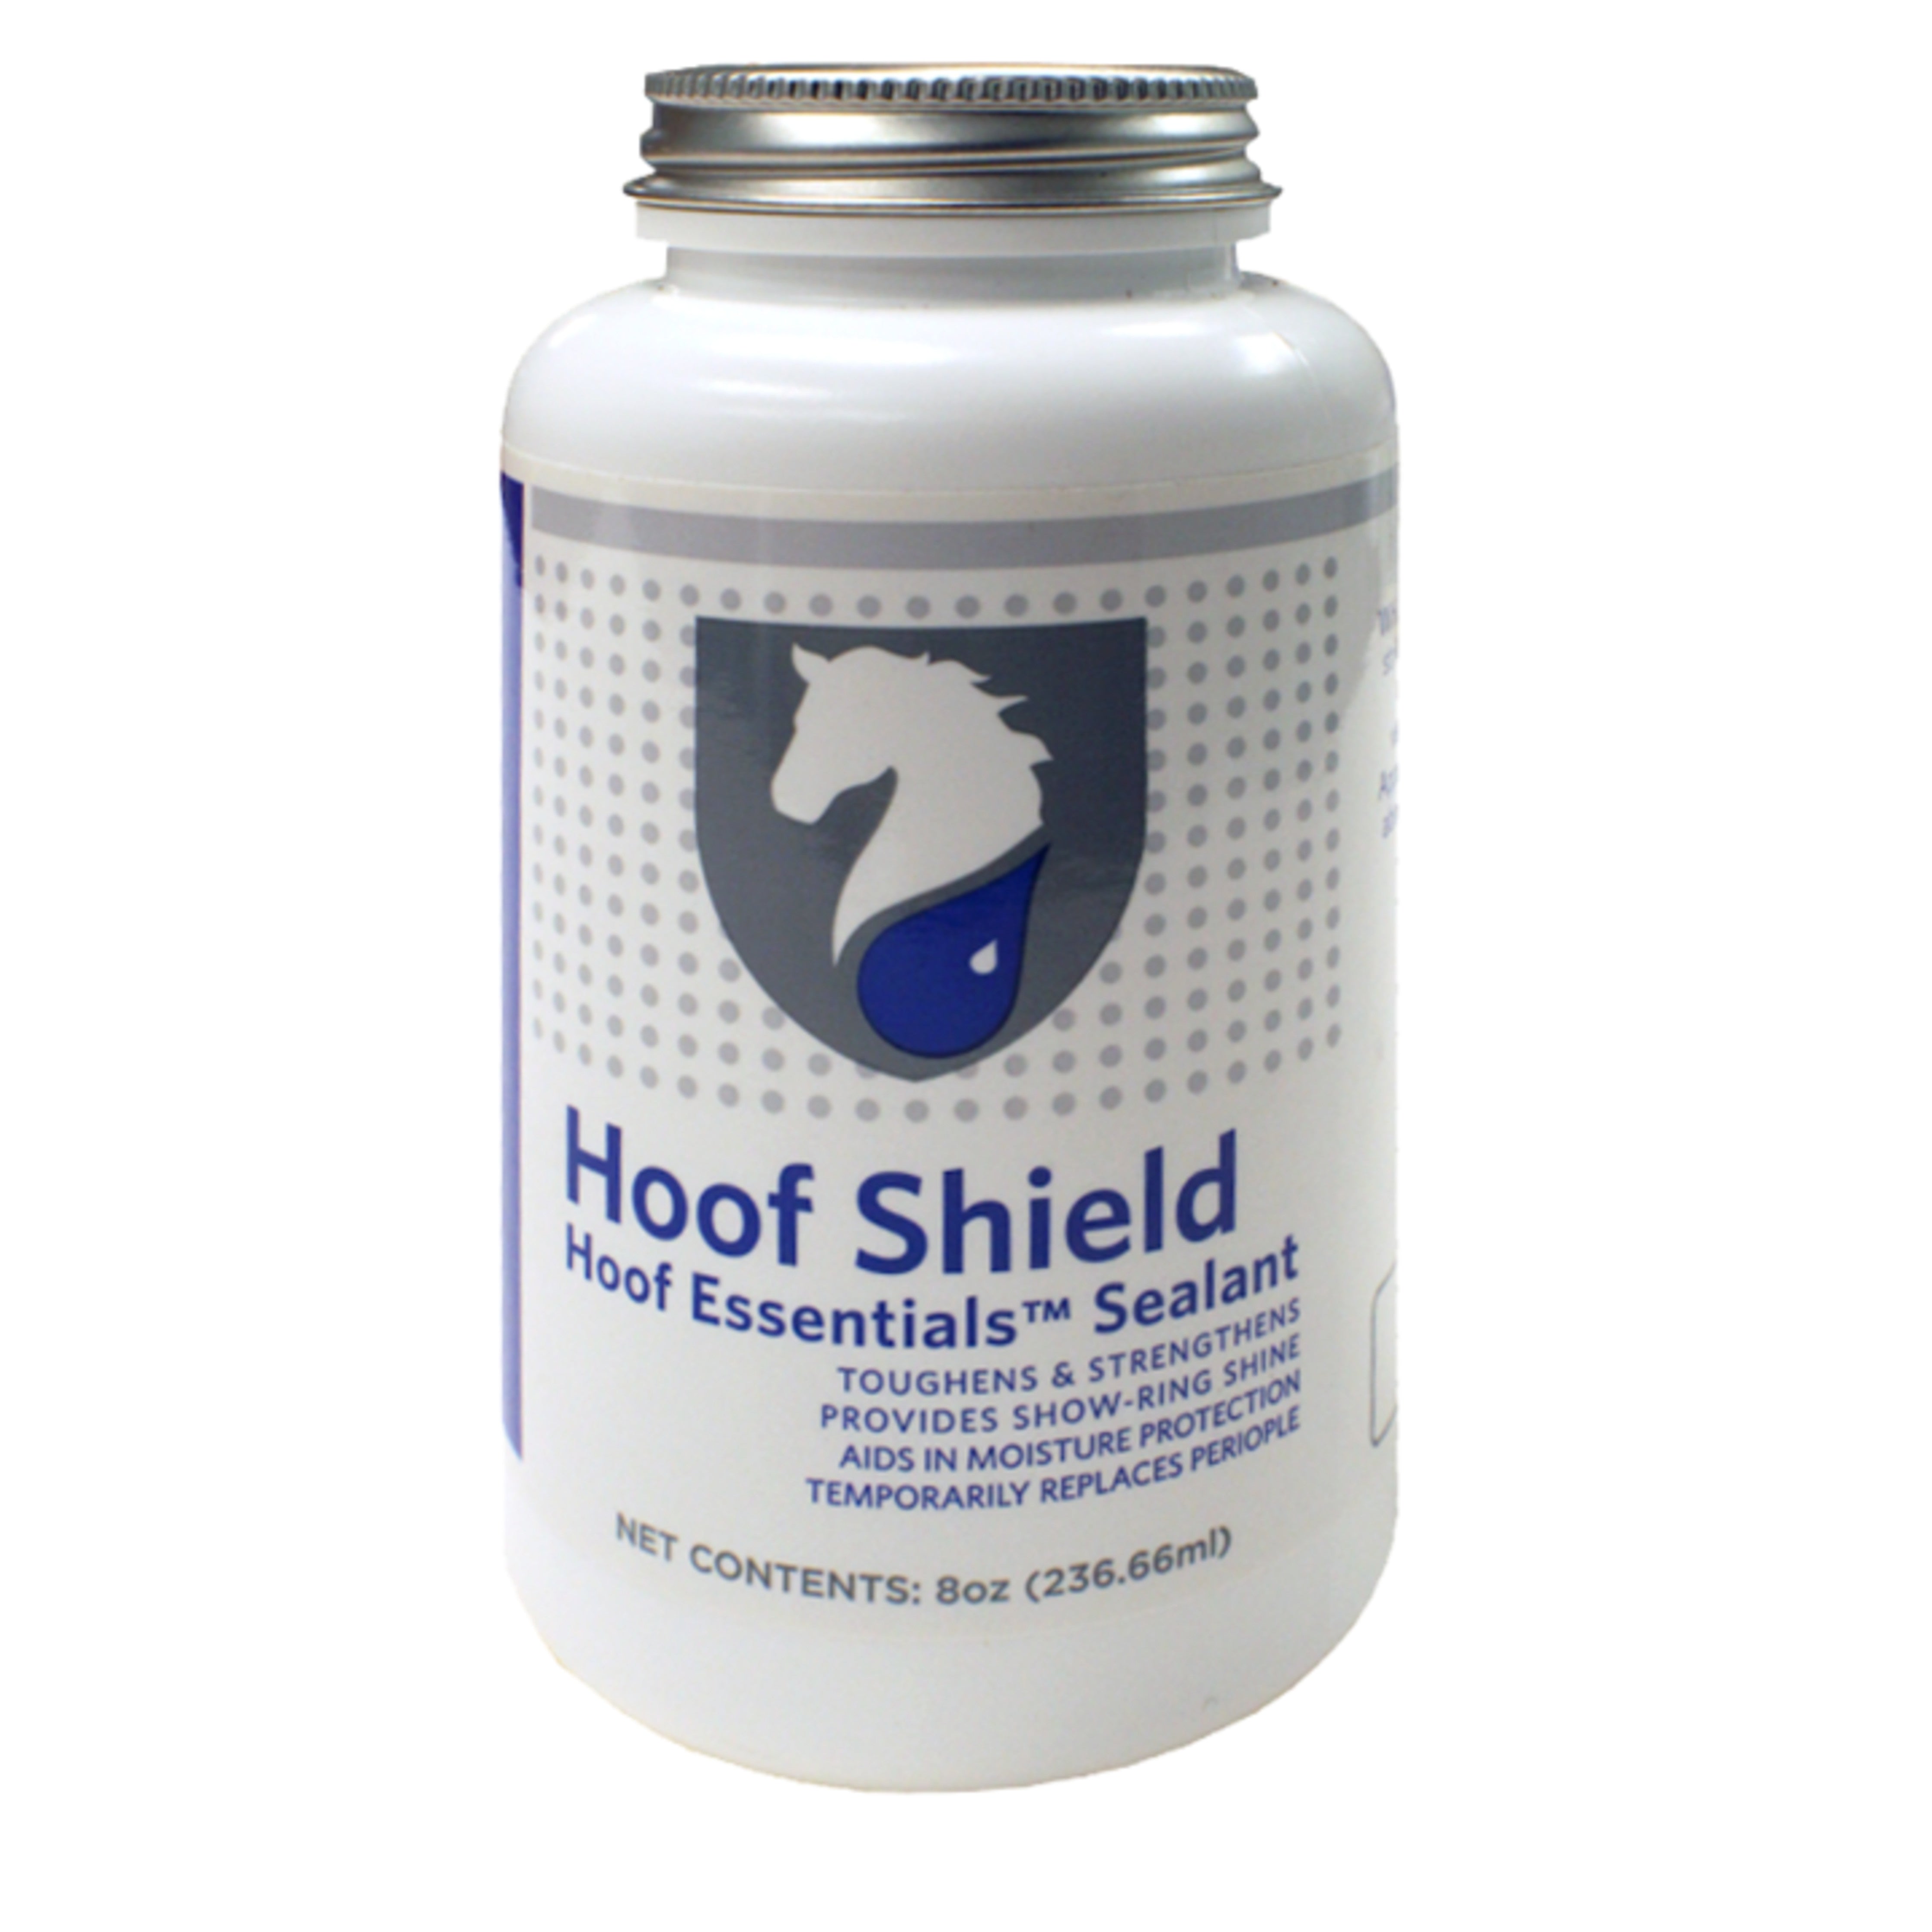 Hoof Shield Hoof Essentials Sealant